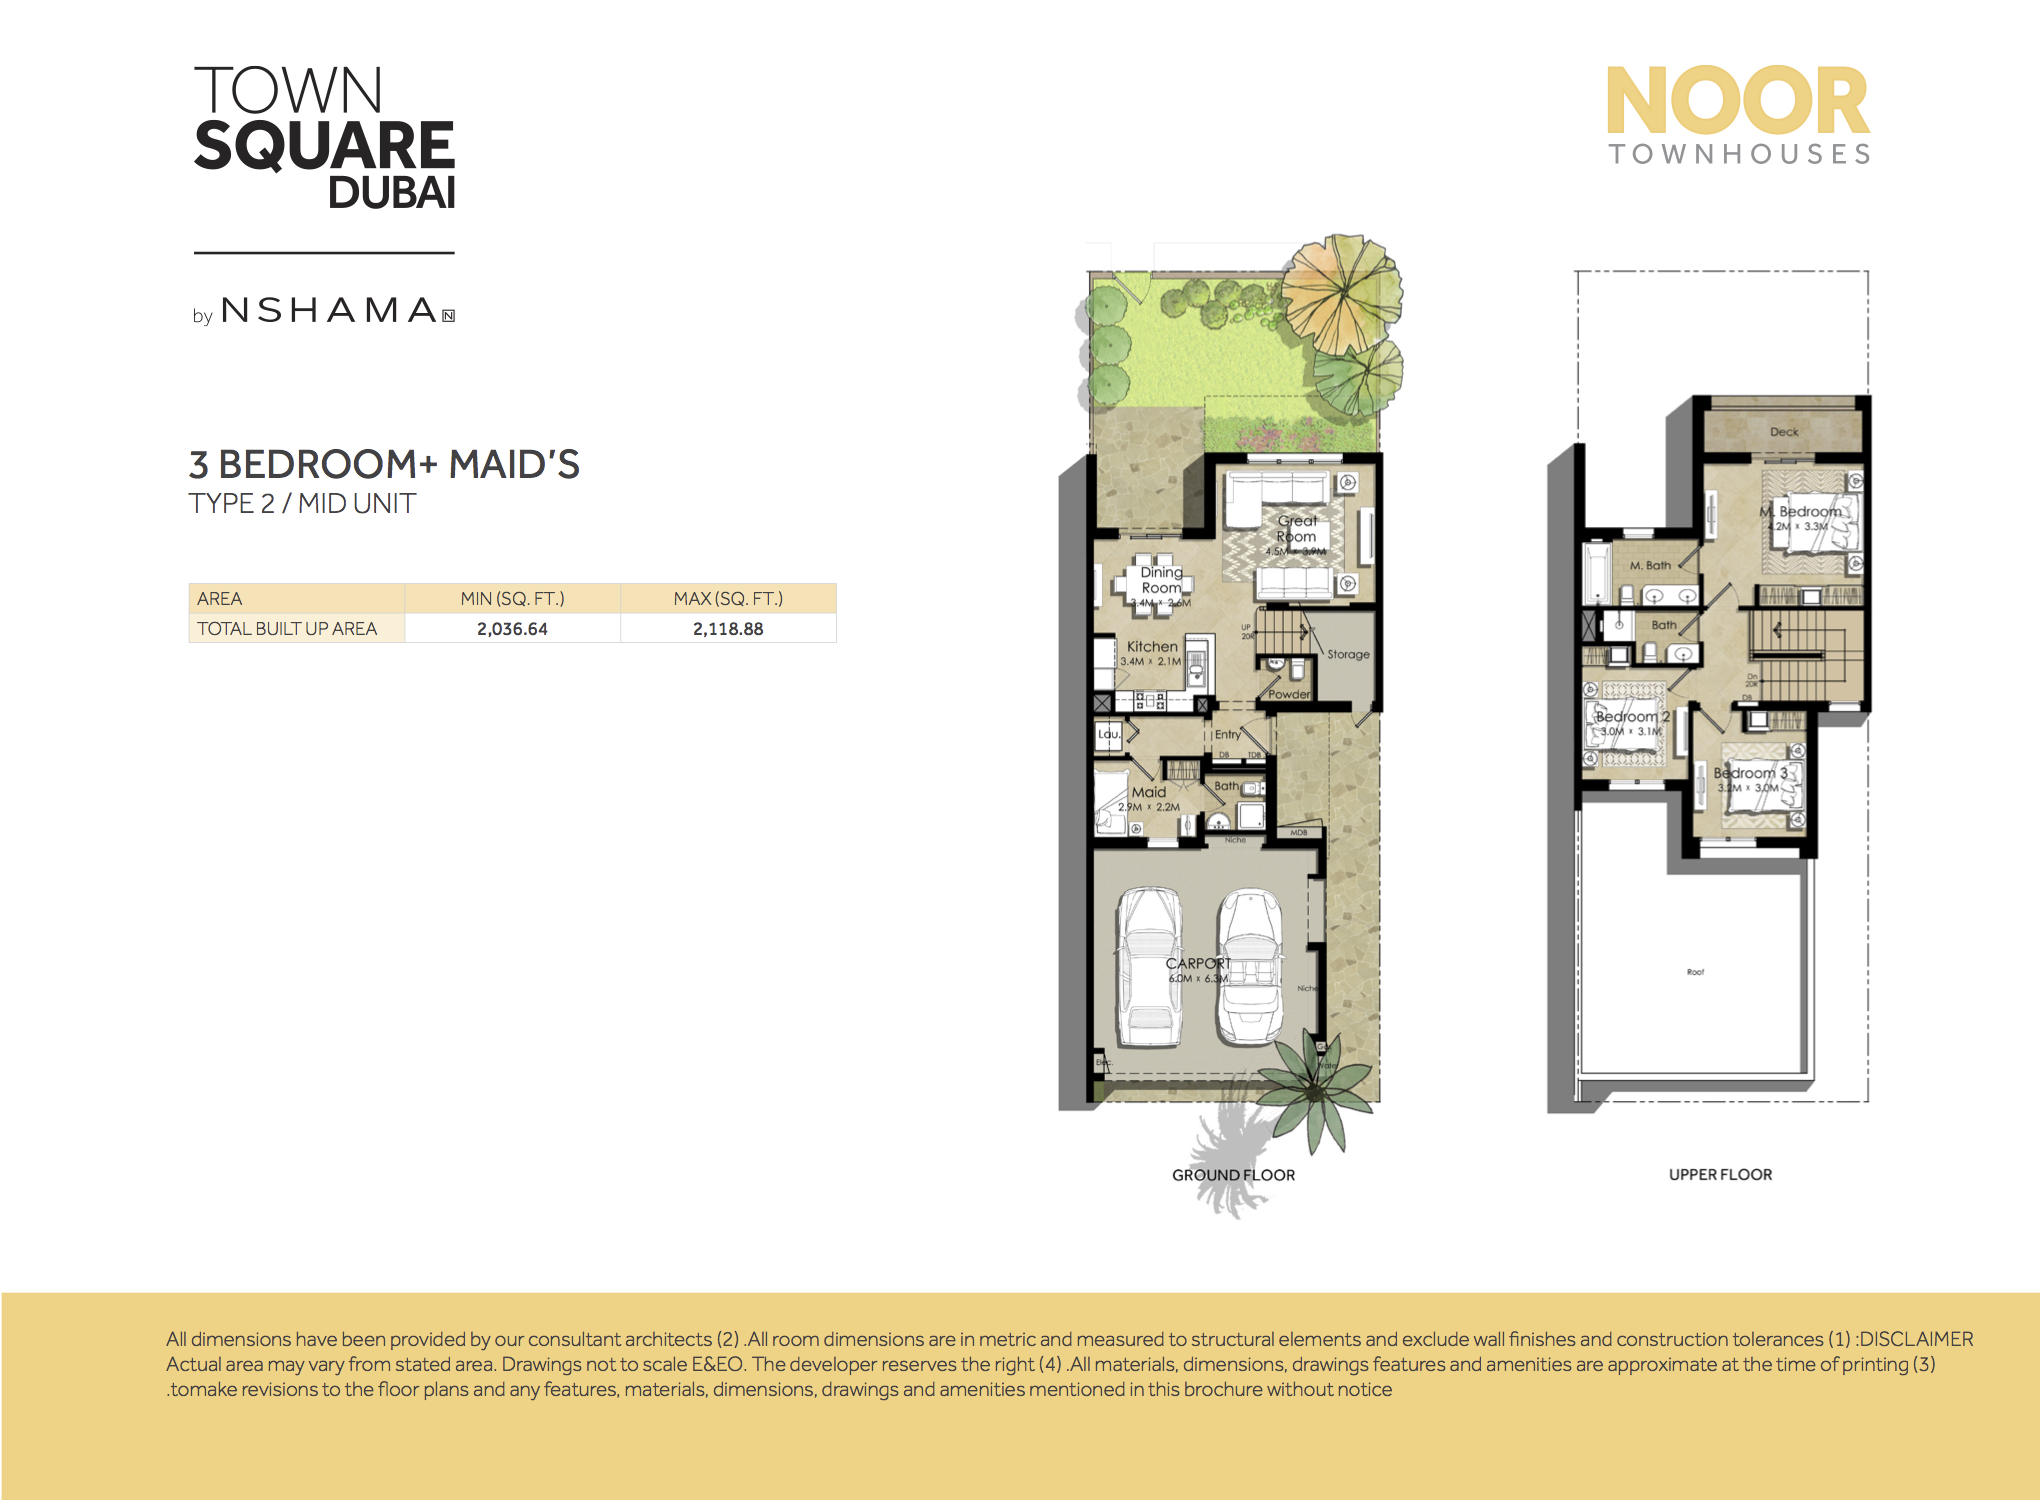 Noor Townhouses Floor Plan Nshama